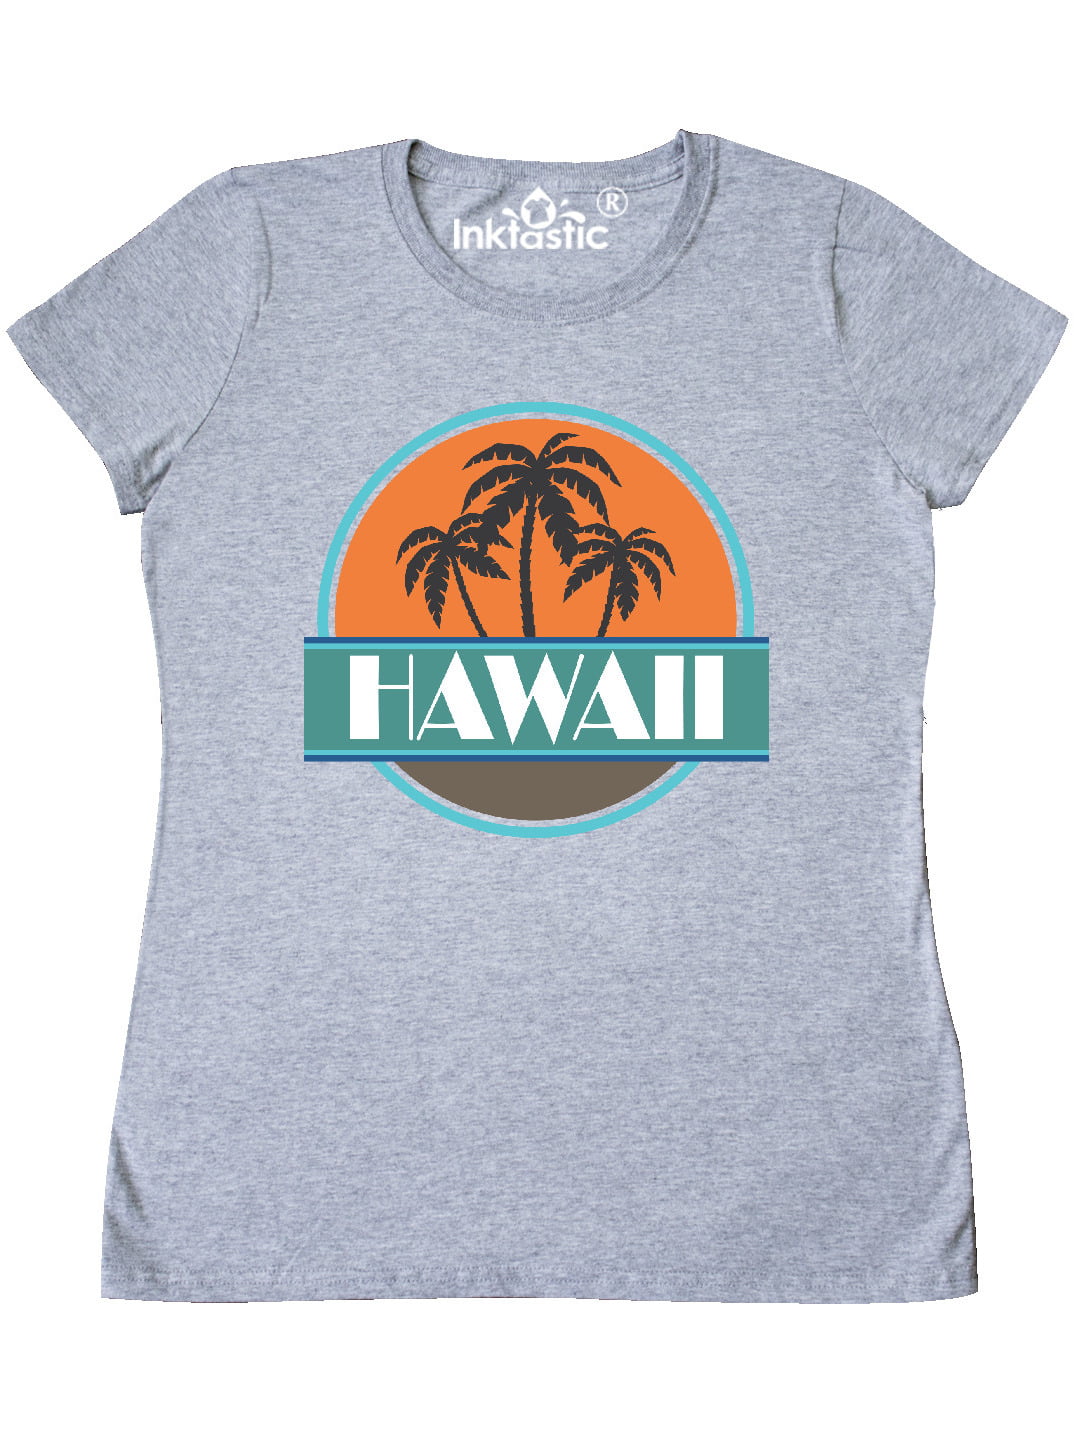 INKtastic - Hawaii Vacation Trip Women's T-Shirt - Walmart.com ...